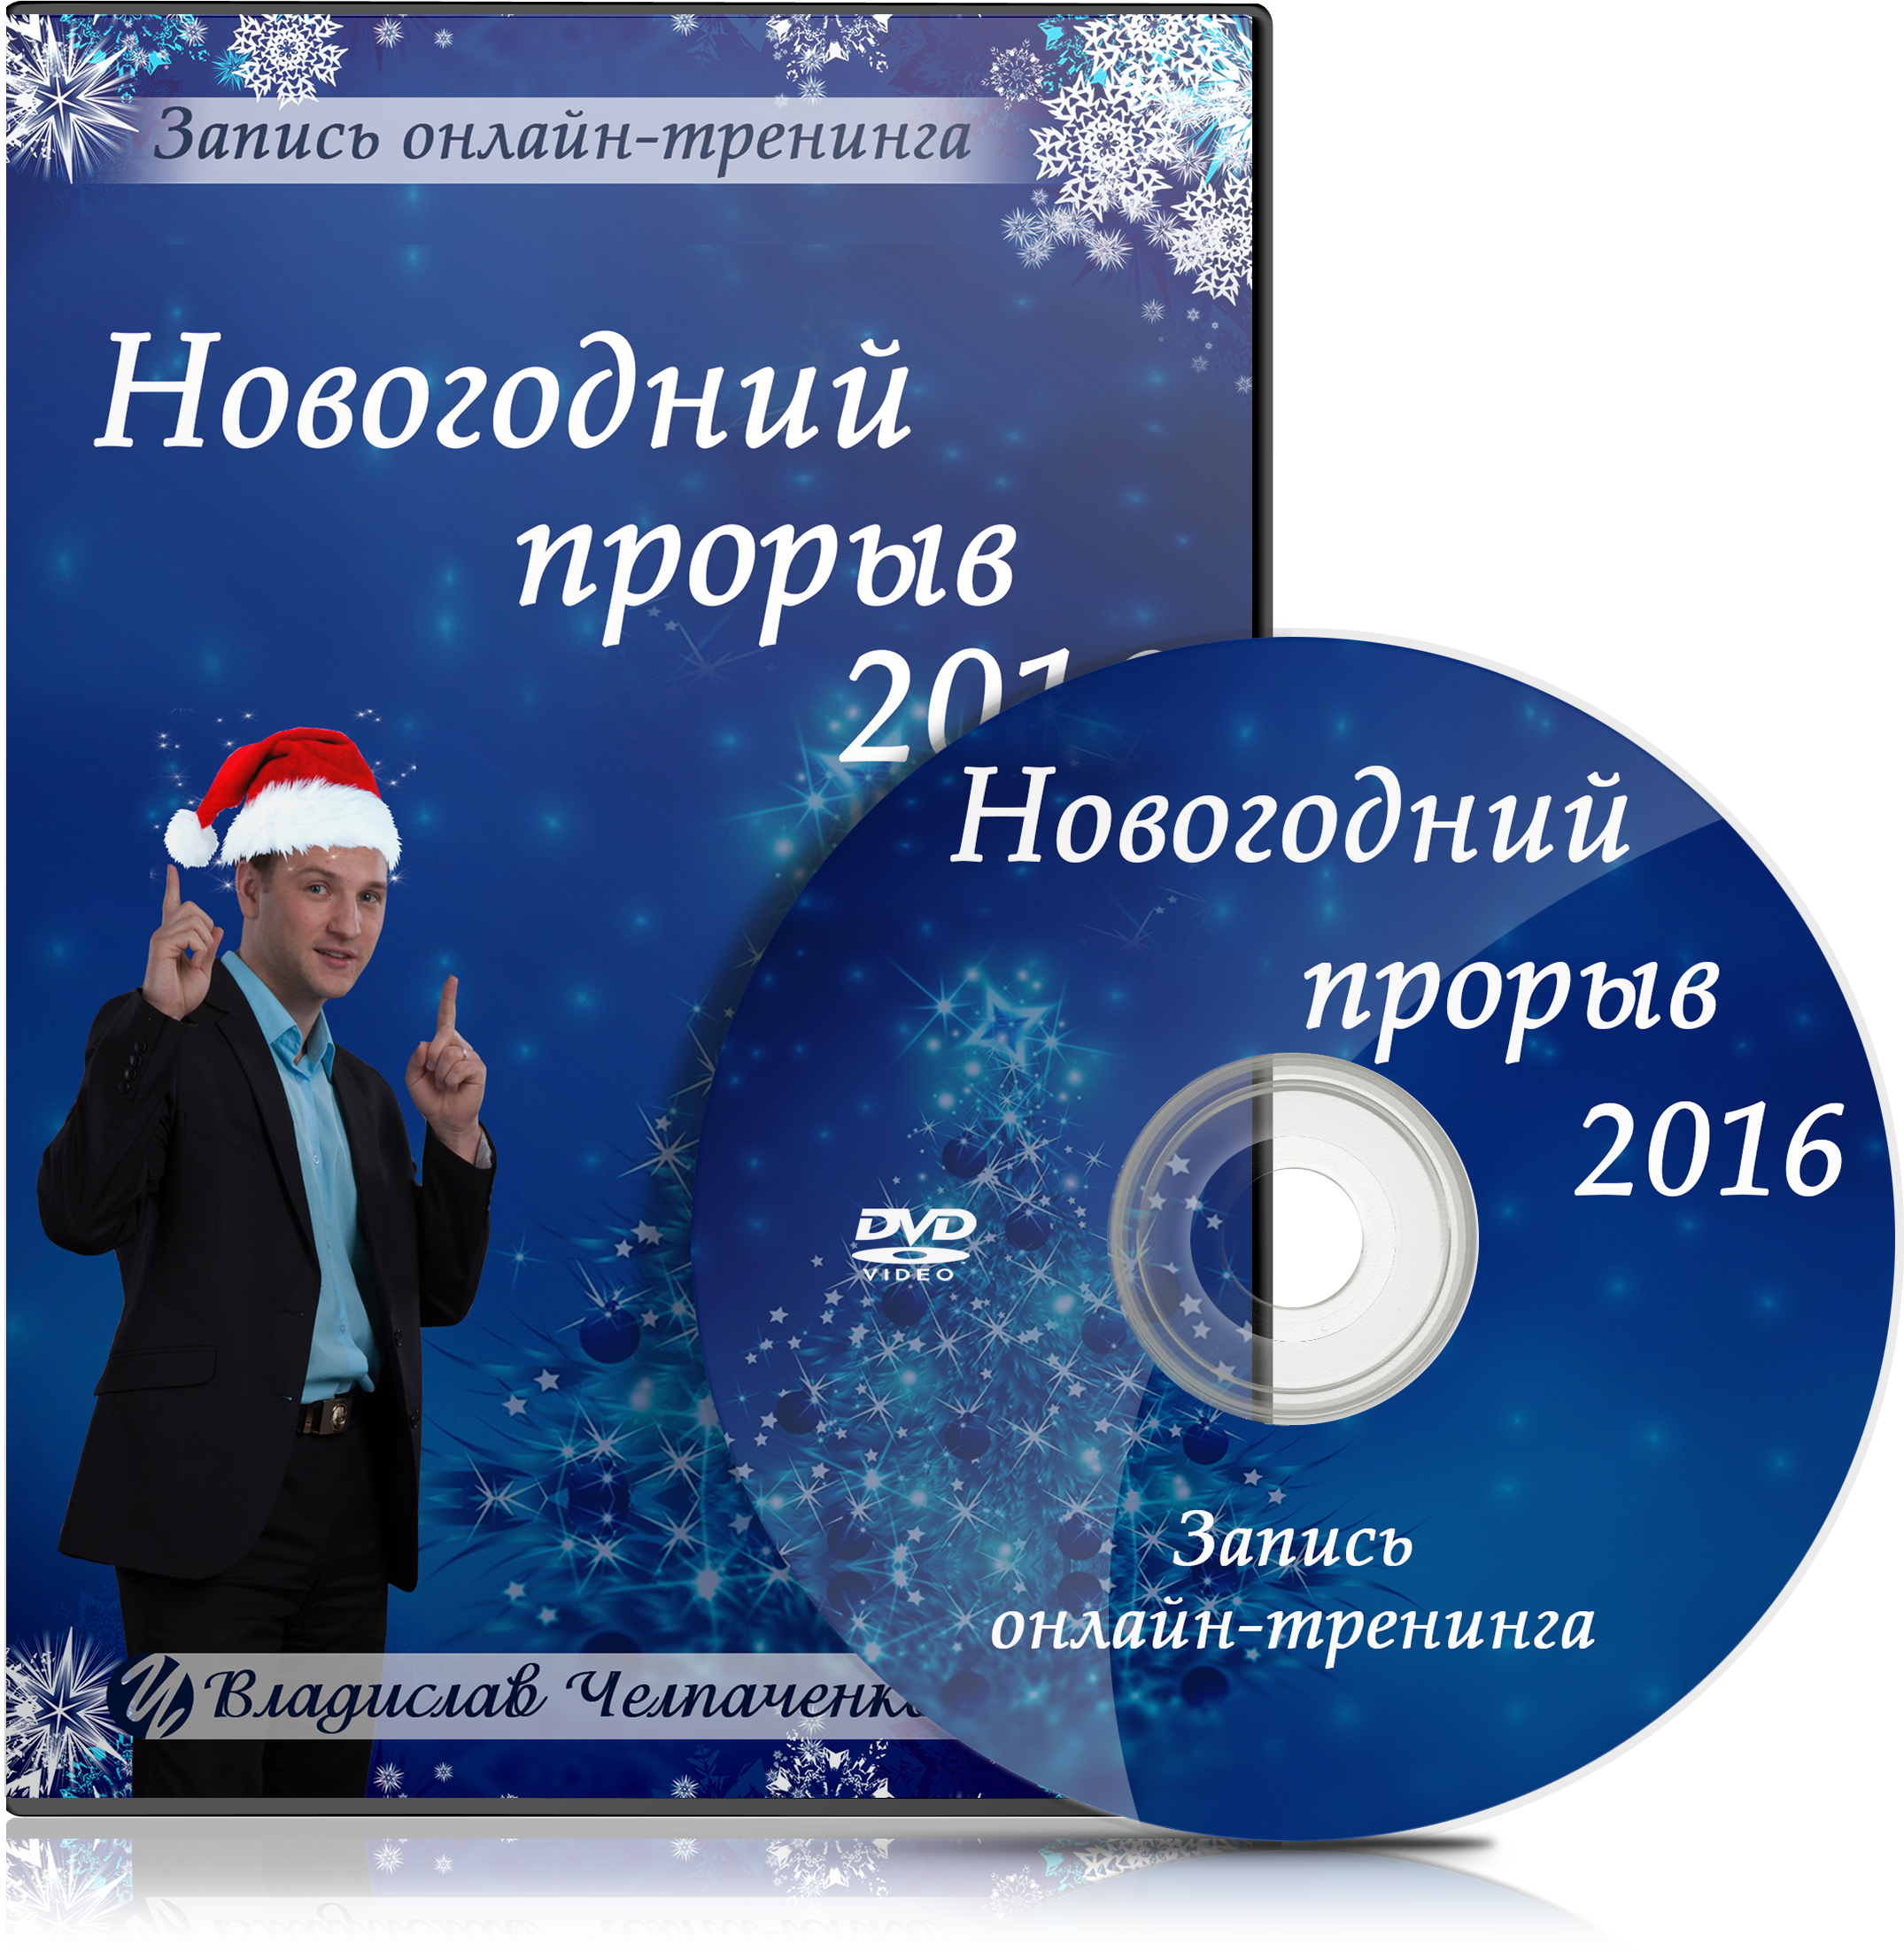 DVD-Диск 1